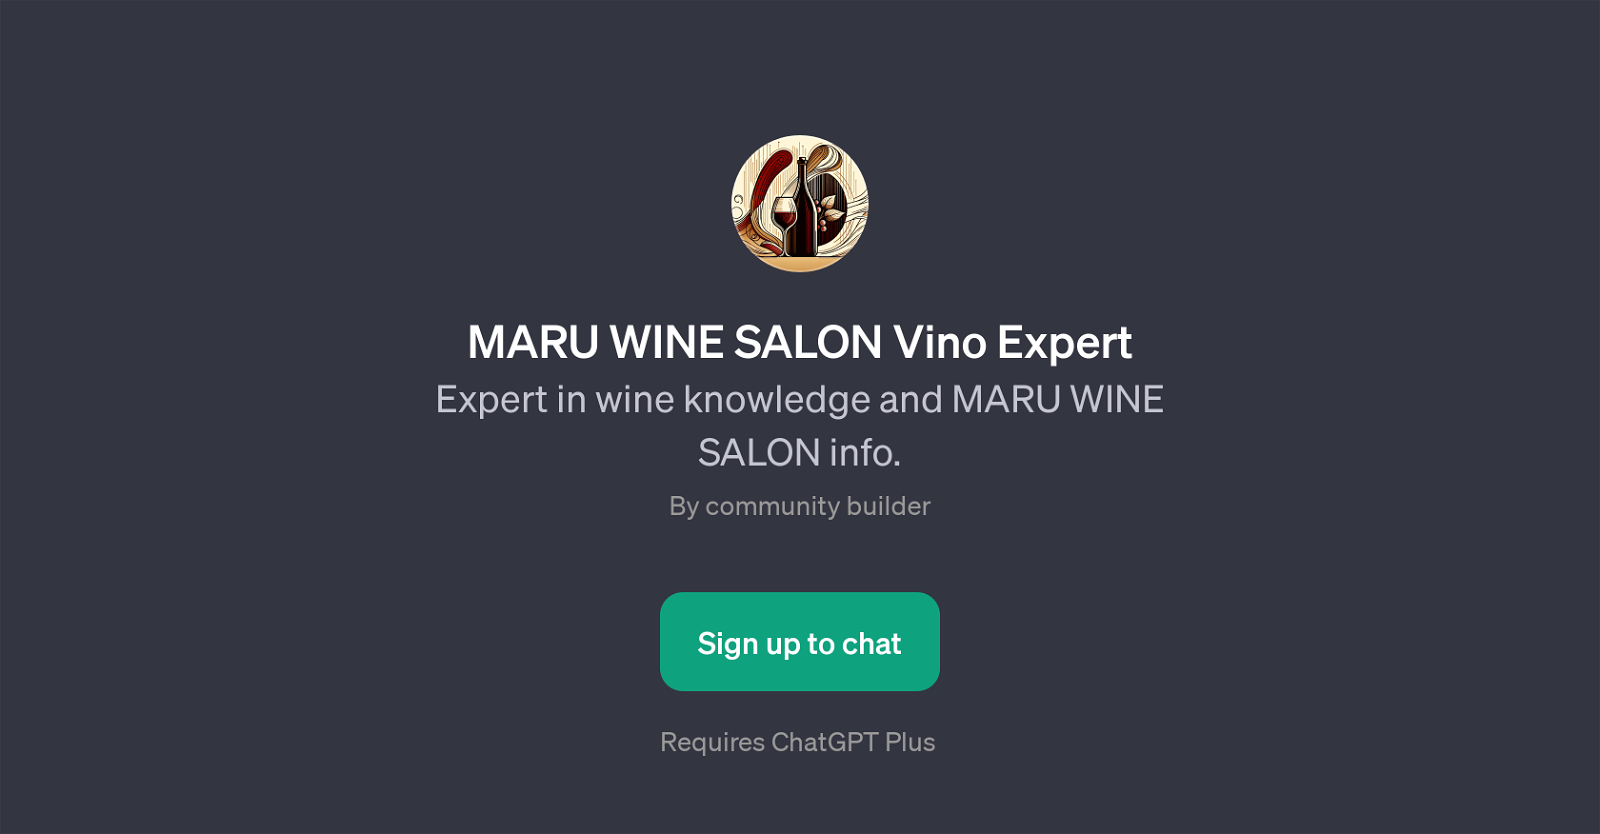 MARU WINE SALON Vino Expert website